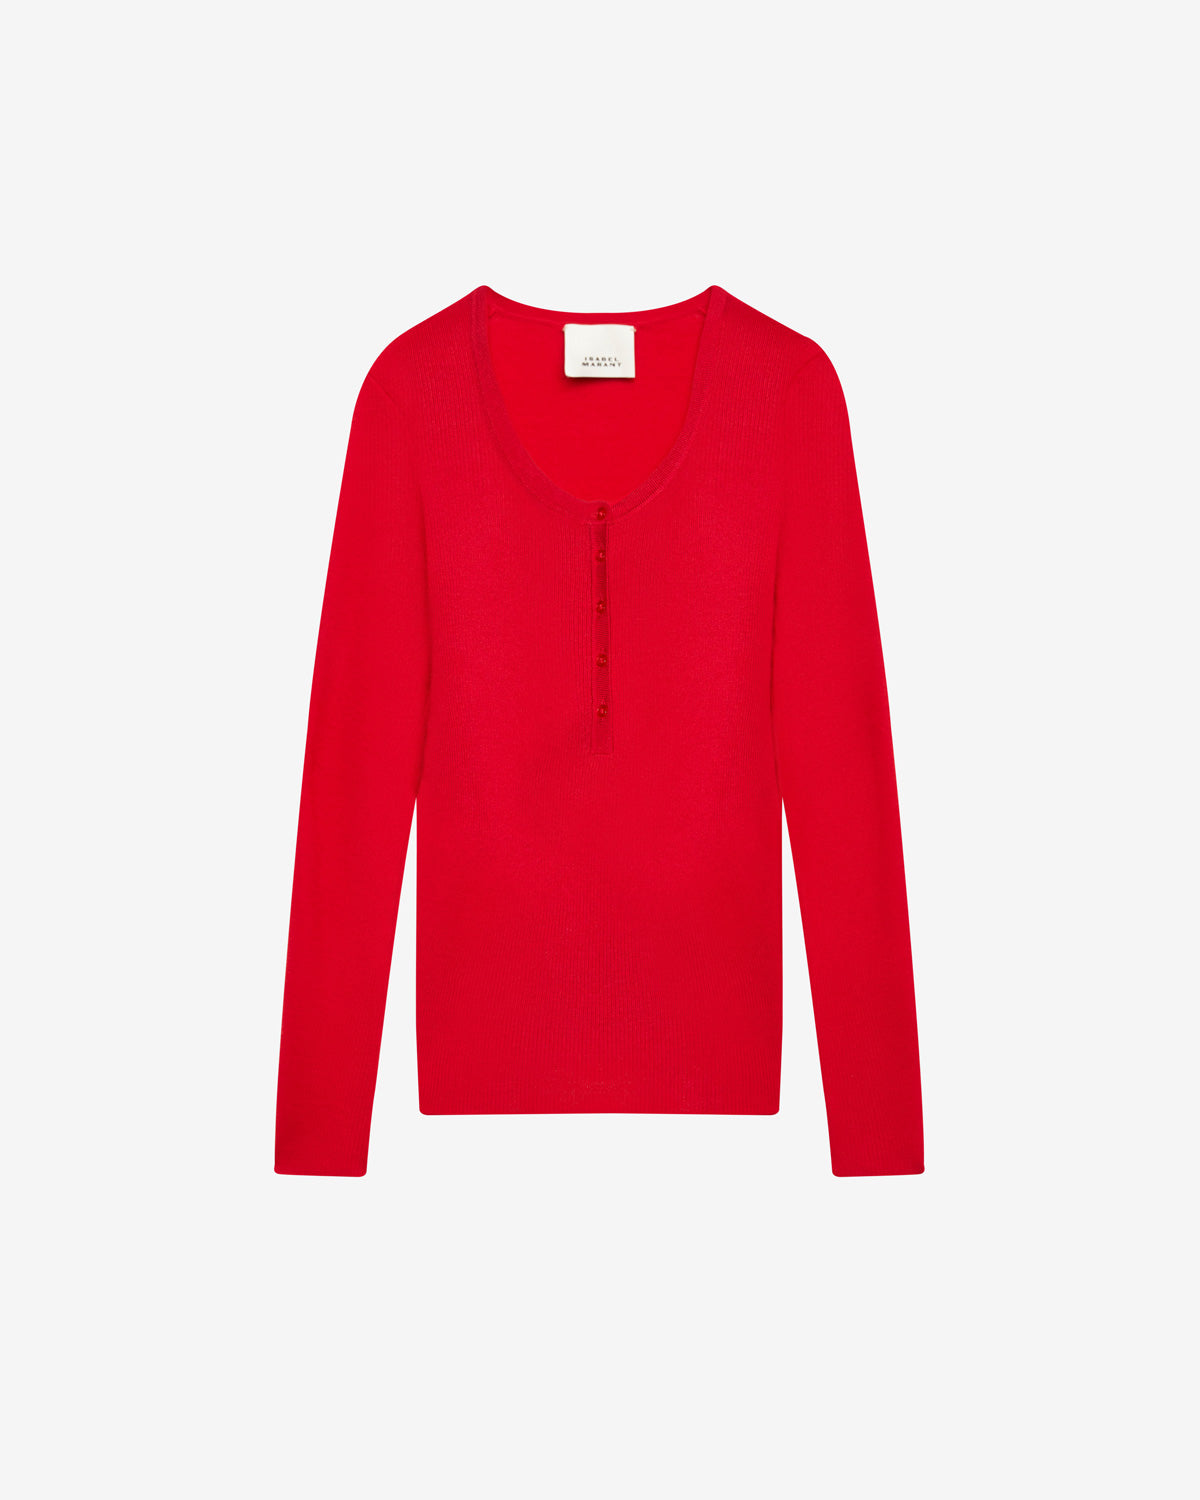 Estine セーター Woman Poppy red 1